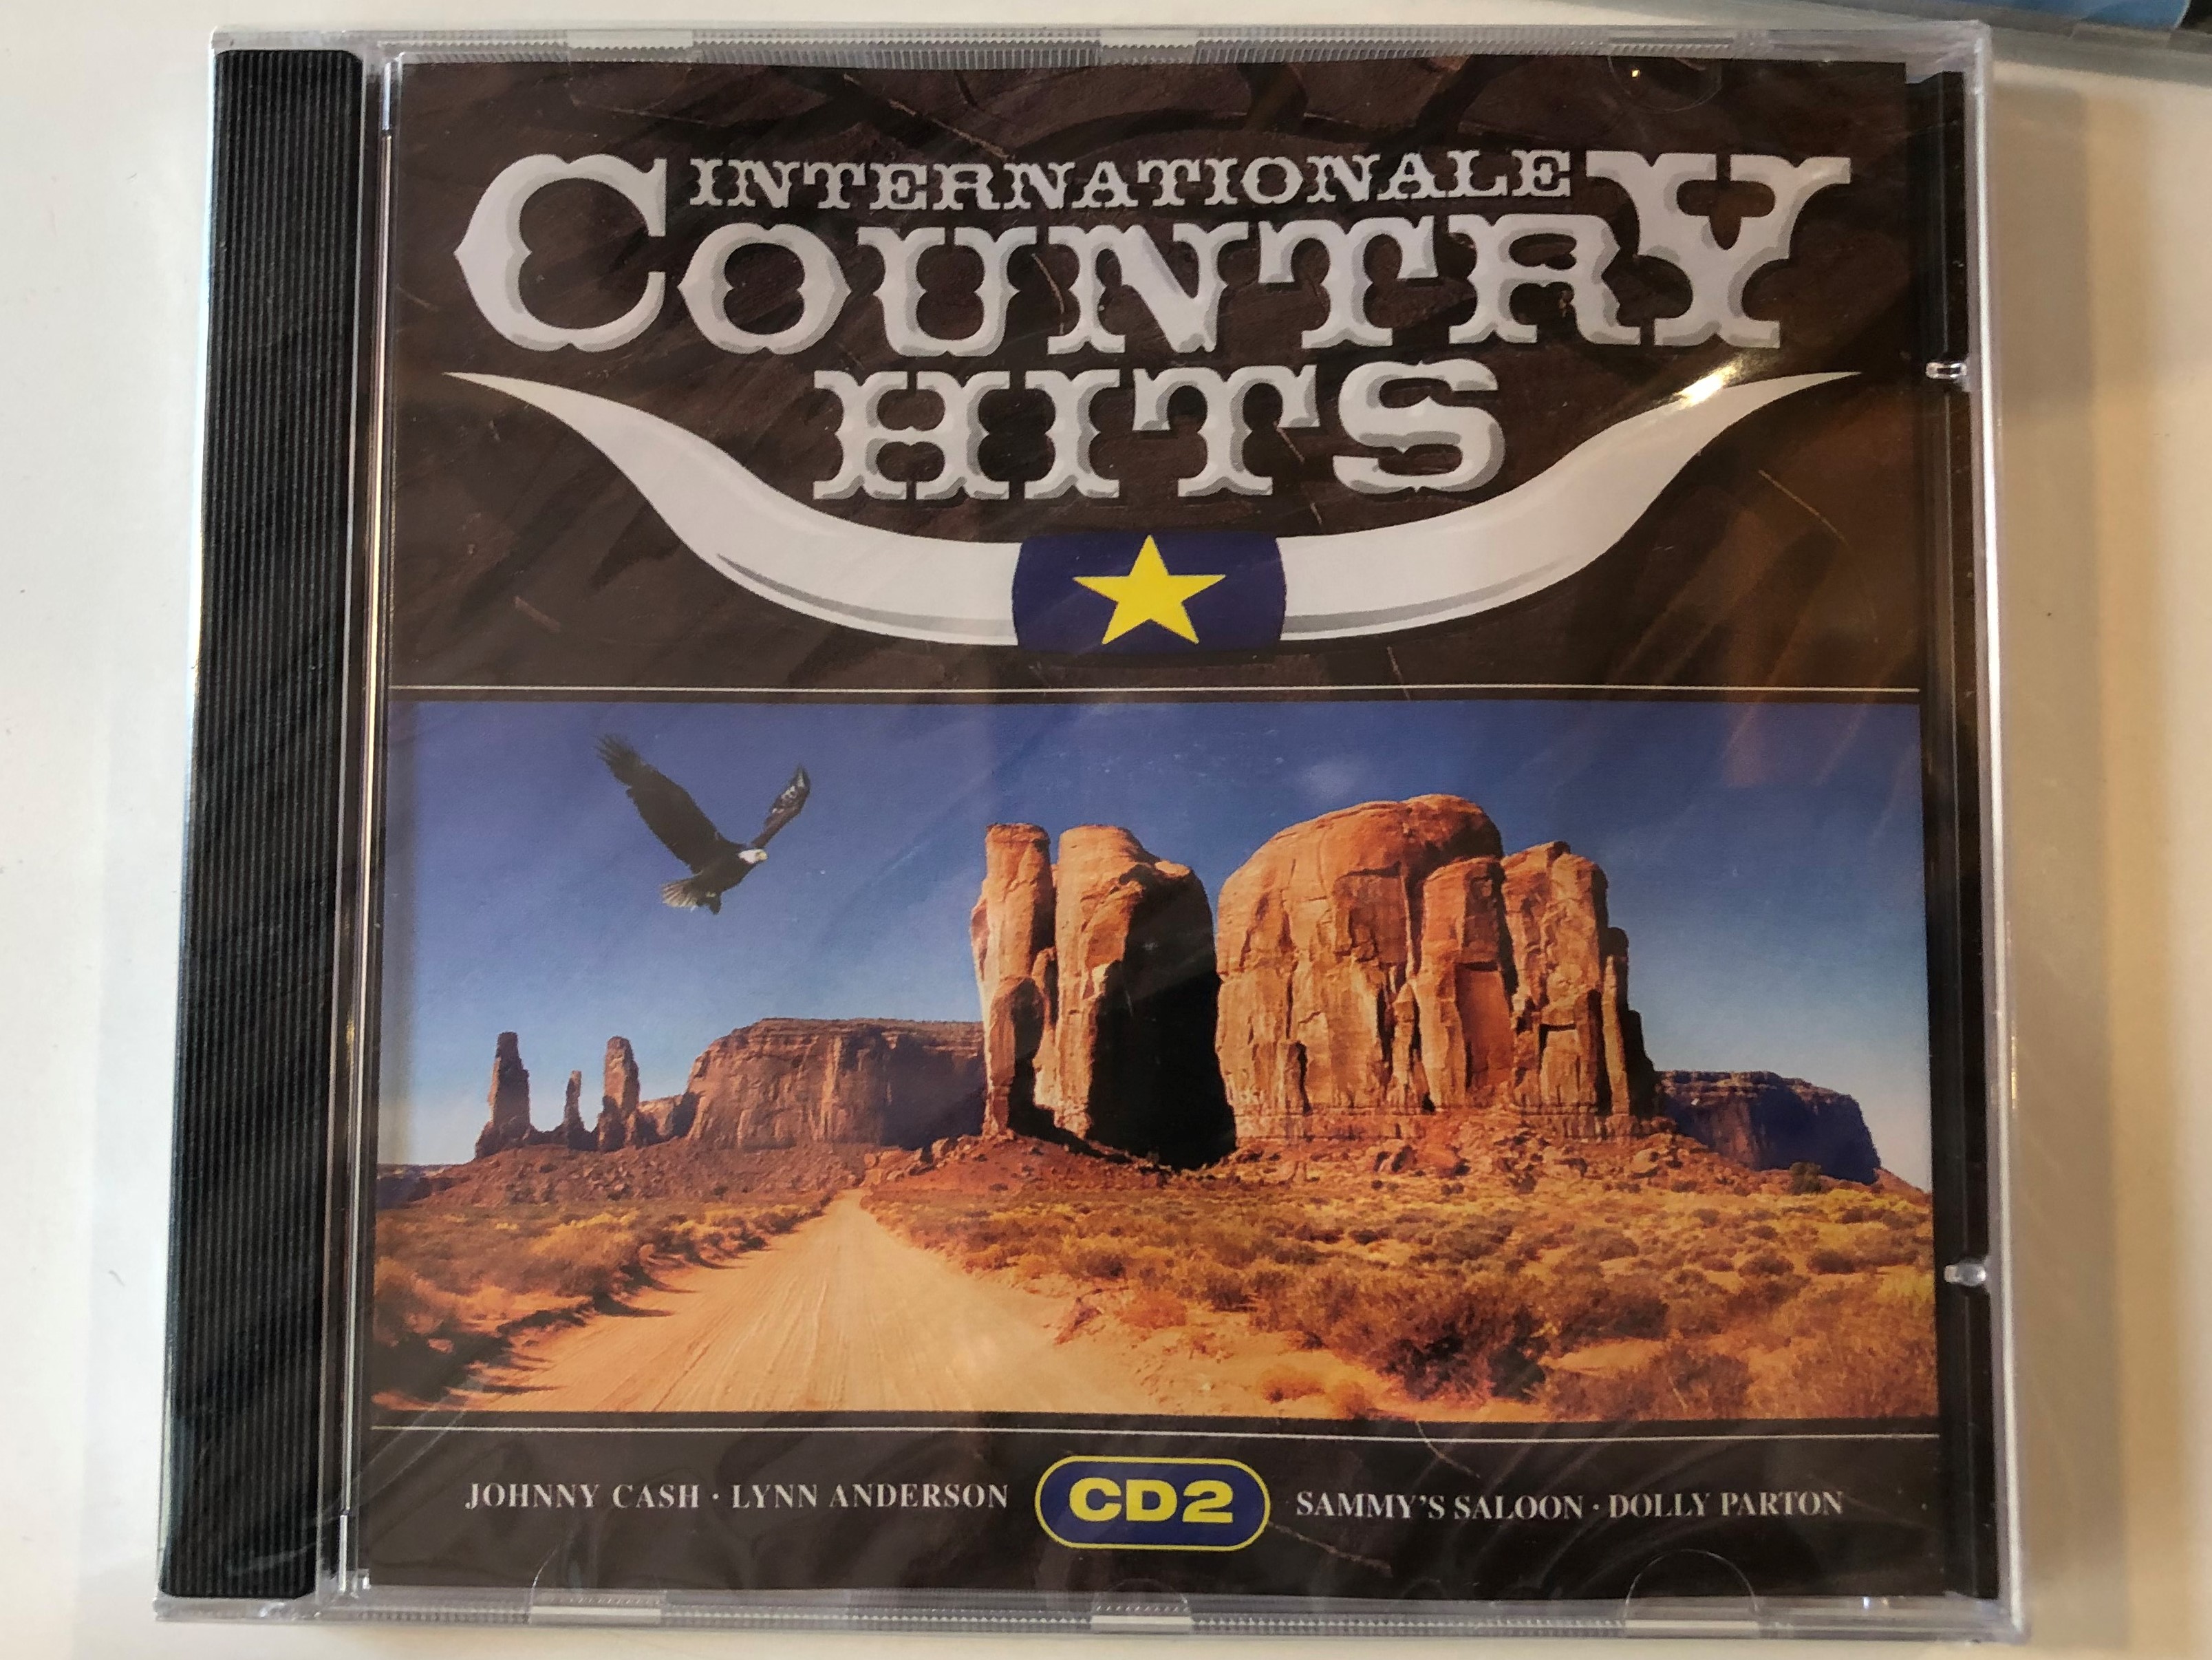 internationale-country-hits-cd-2-johnny-cash-lynn-anderson-sammy-s-saloon-dolly-parton-eurotrend-audio-cd-cd-154-1-.jpg